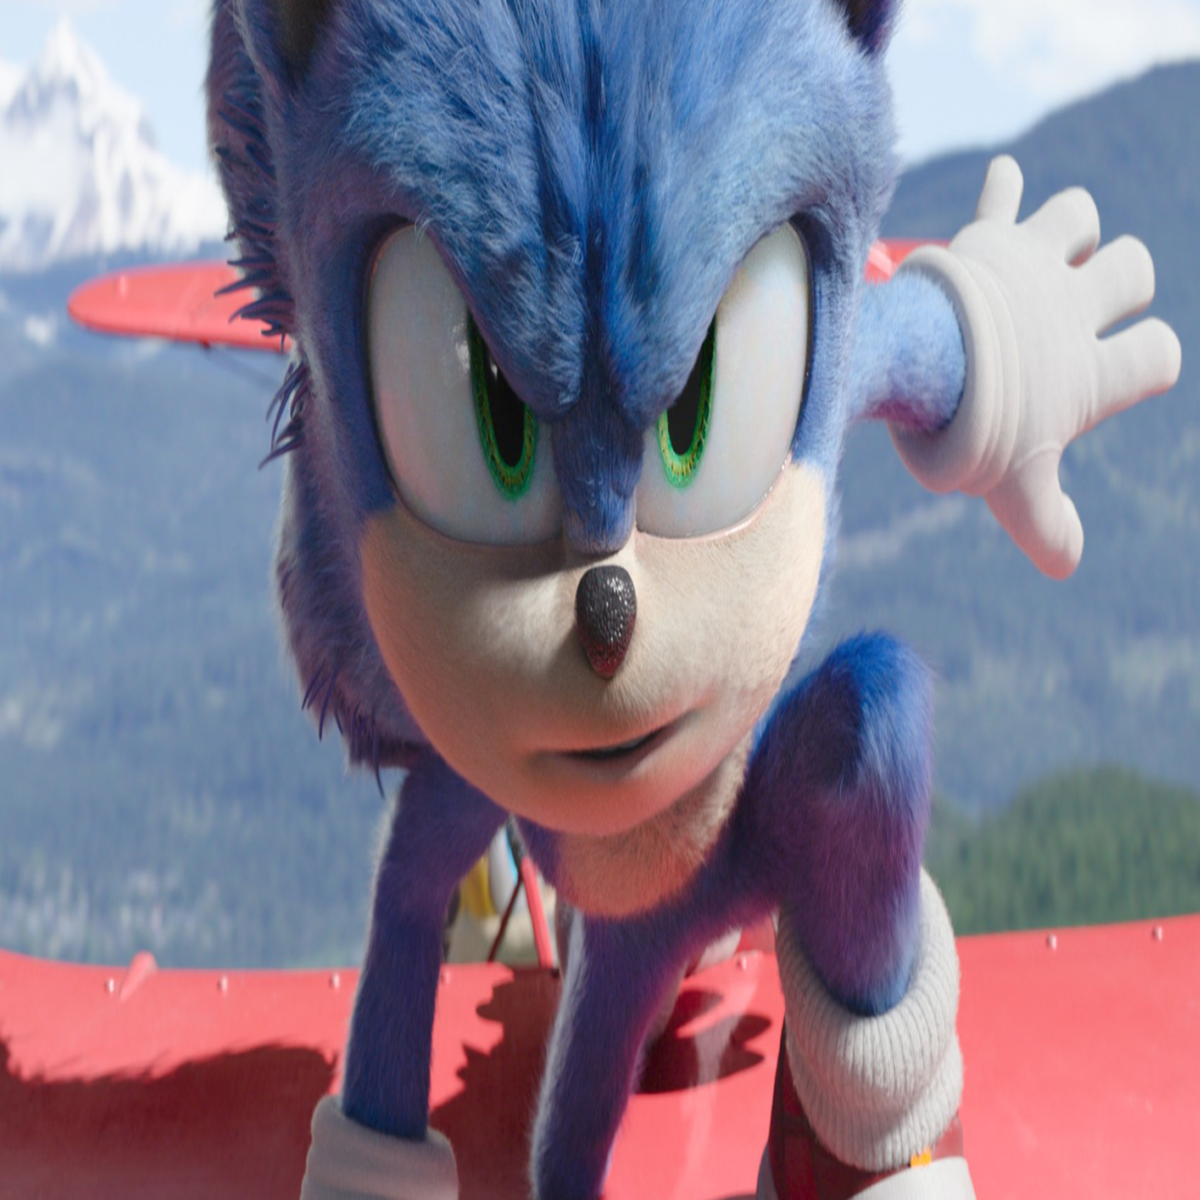 Sonic The Hedgehog Movie 2020 PNG Transparent